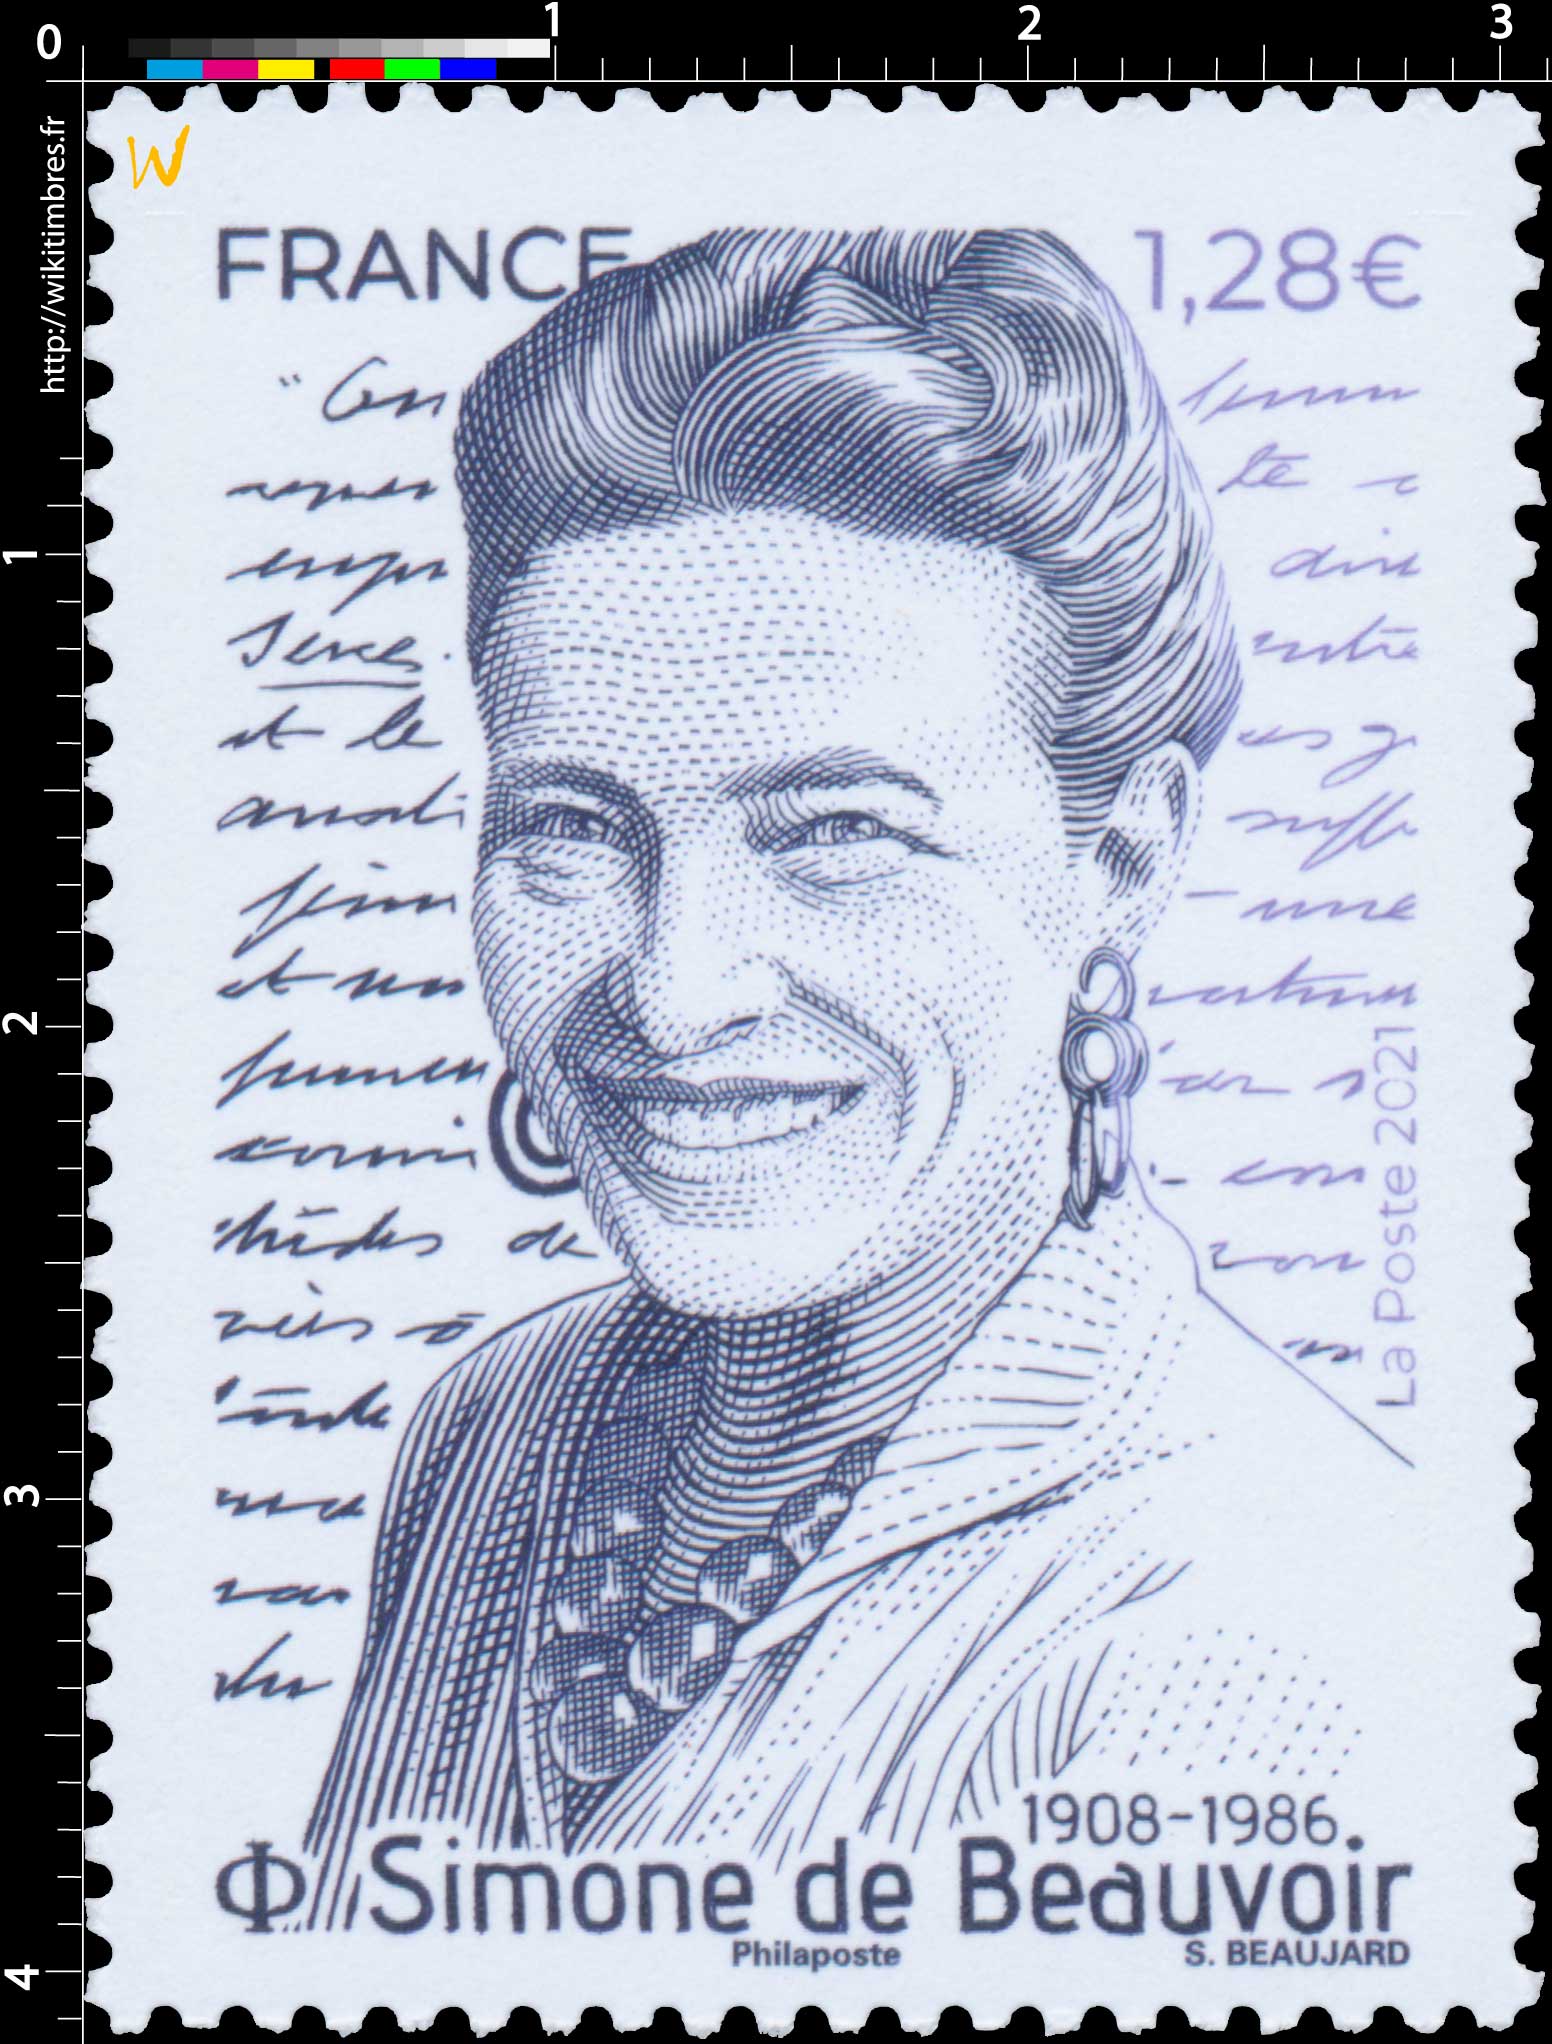 2021 Simone de Beauvoir 1908 - 1986